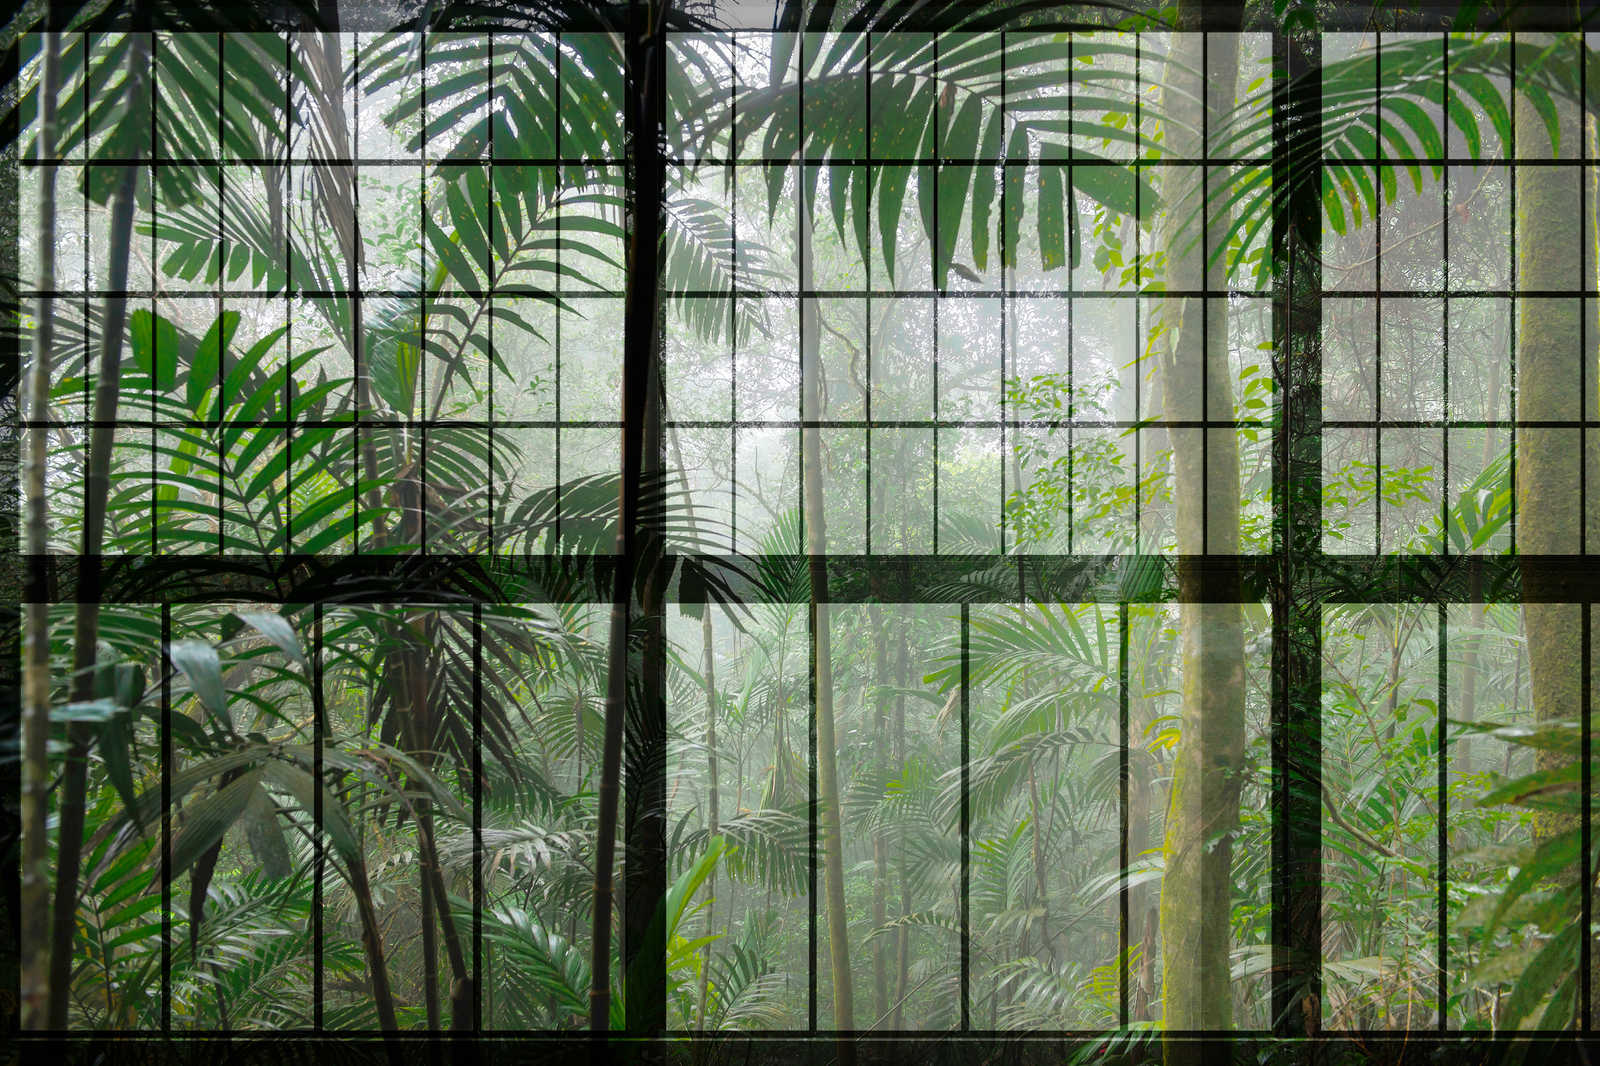             Rainforest 1 - Loft Window Canvas Painting with Jungle View - 1.20 m x 0.80 m
        